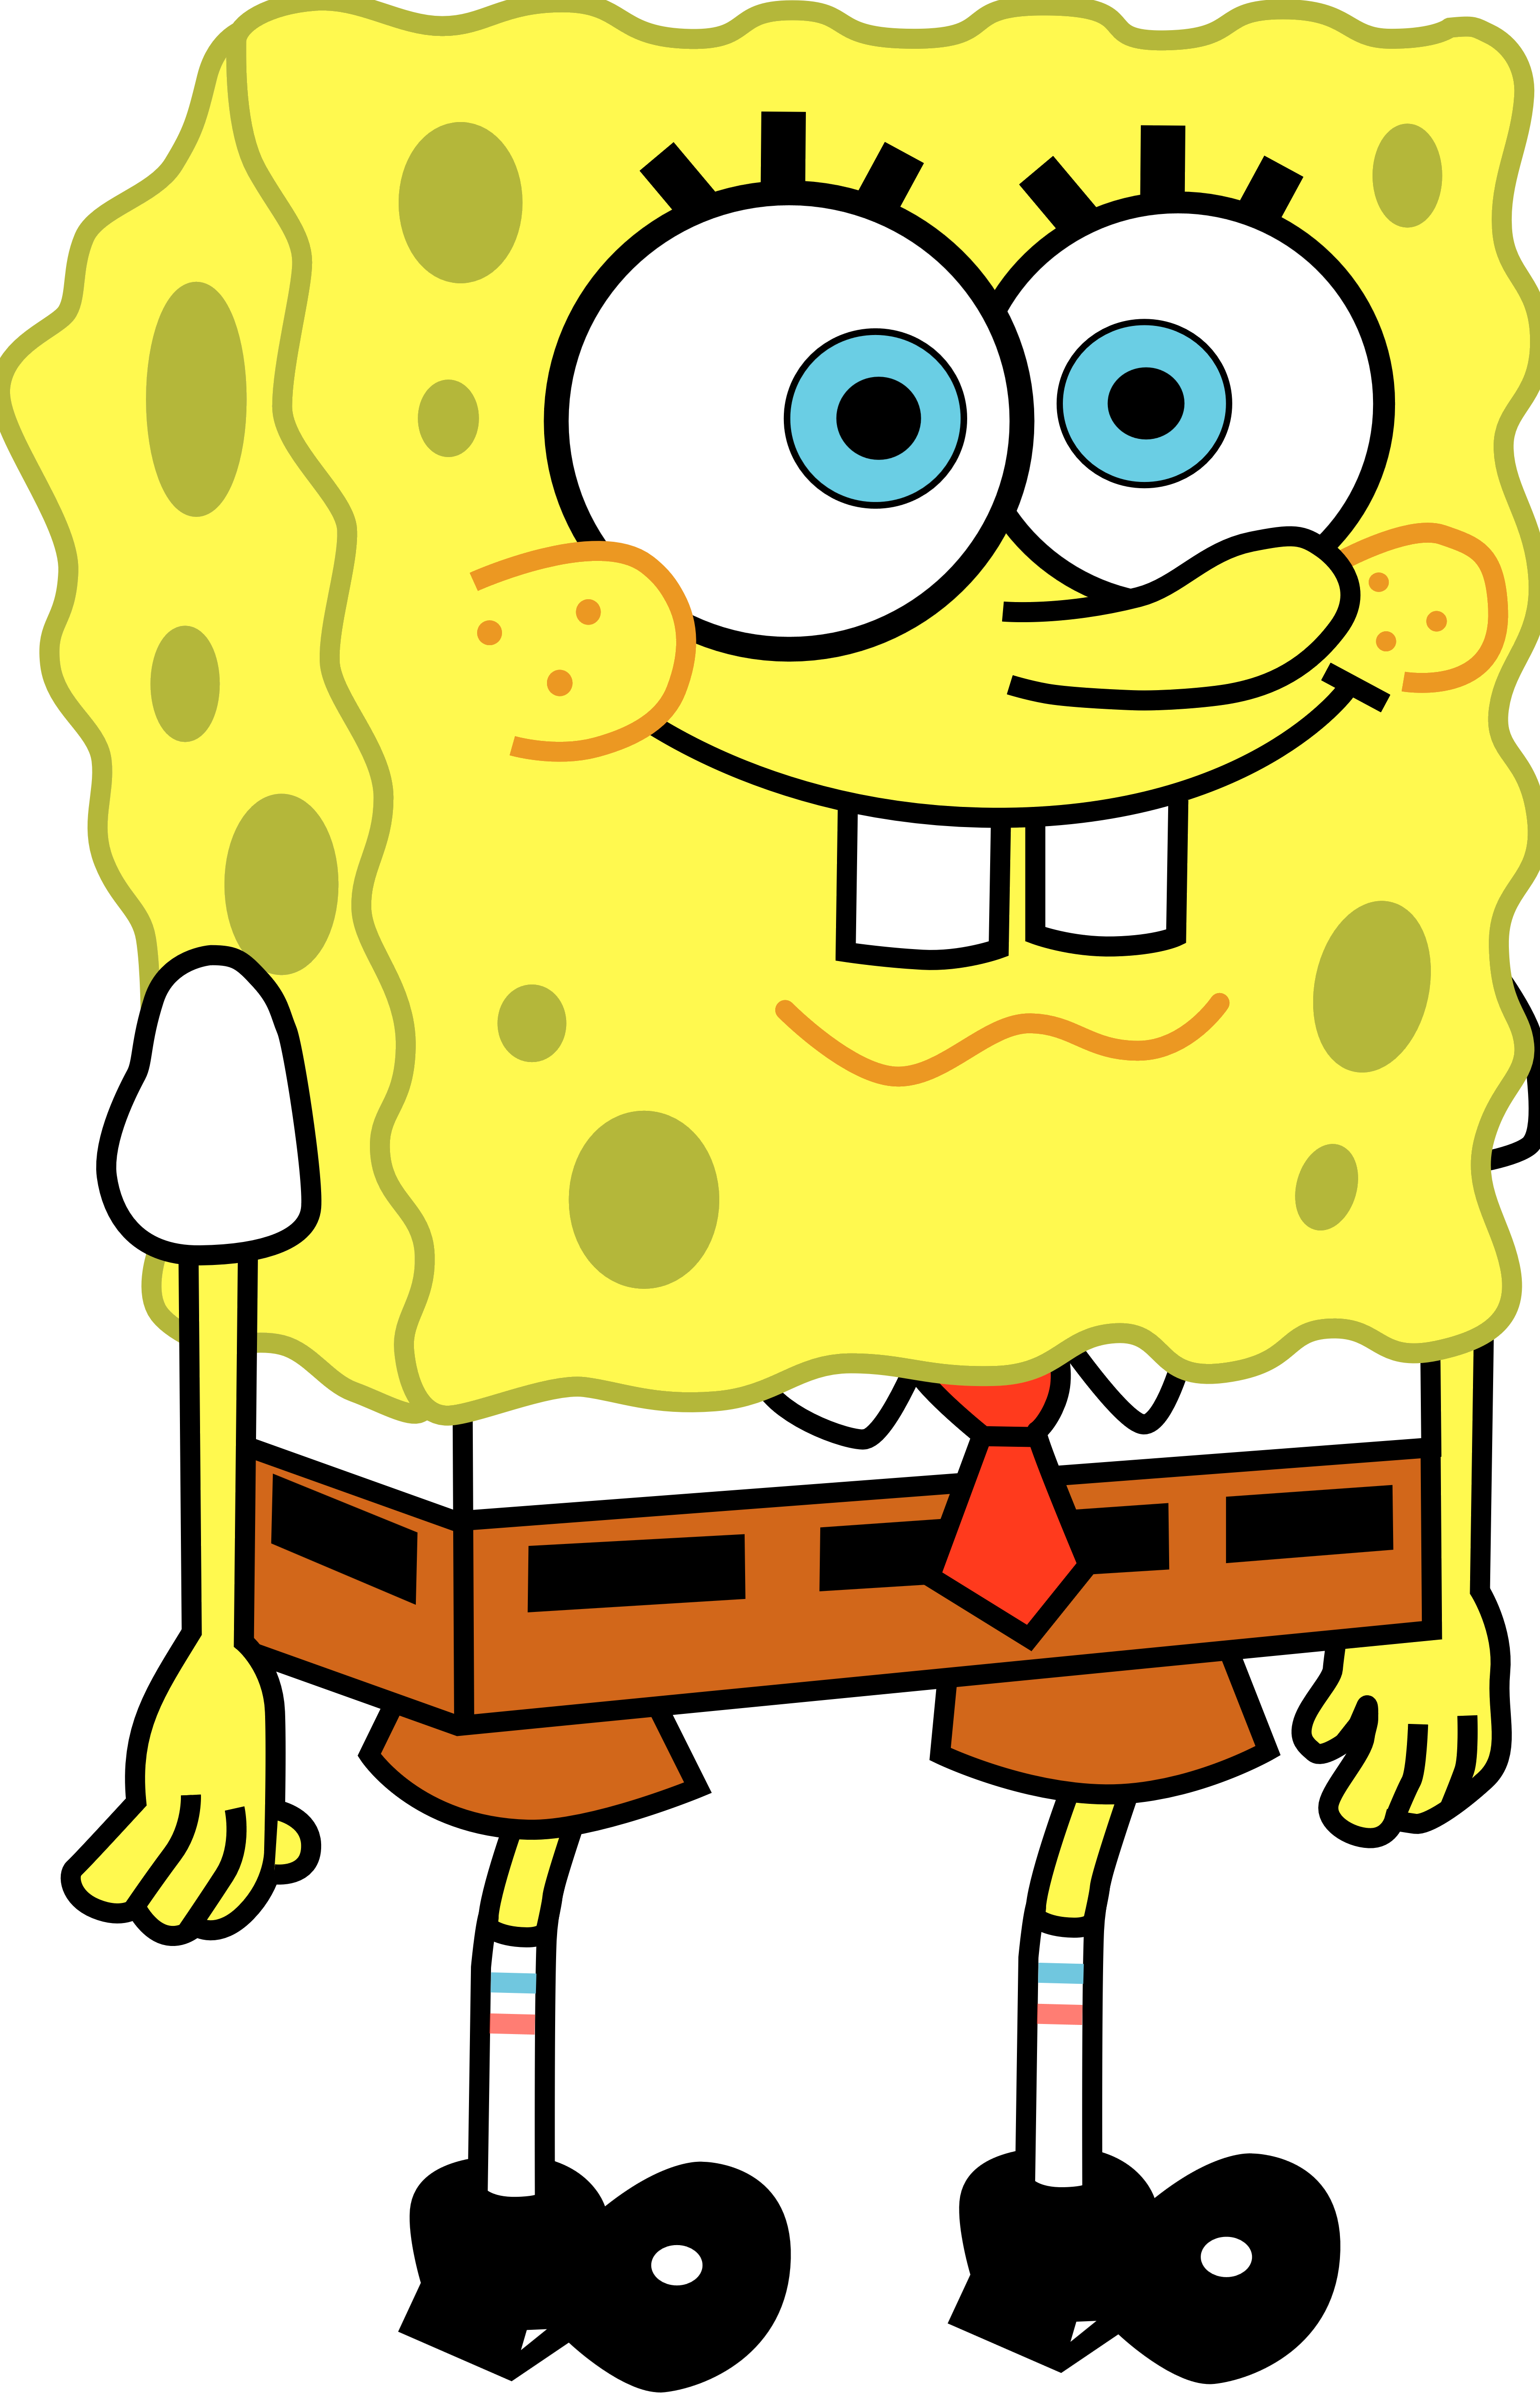 Just Arrived Download Spongebob Squarepants Spongebob - Just Arrived Download Spongebob Squarepants Spongebob (3218x5000)